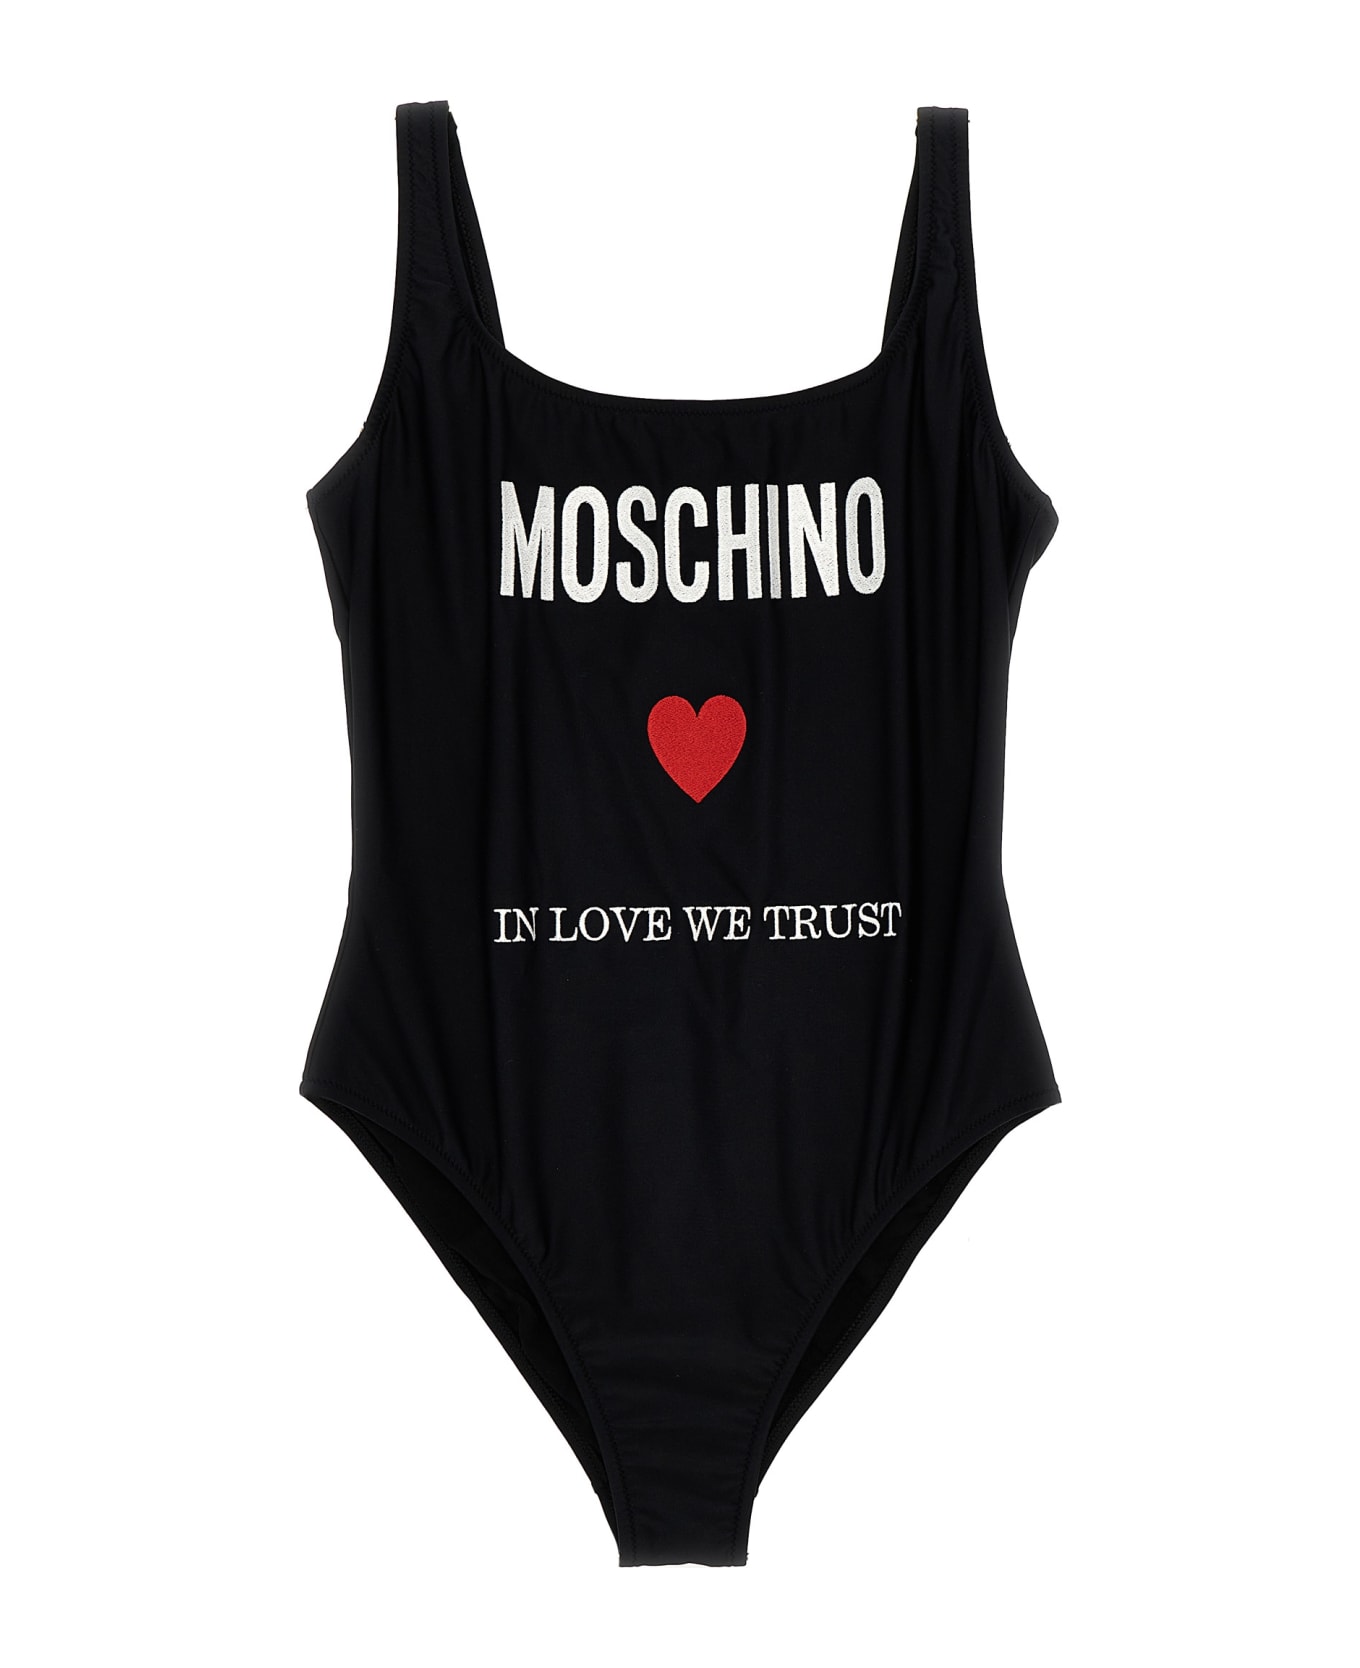 Moschino 'in Love We Trust' One-piece Swimsuit - Black   水着